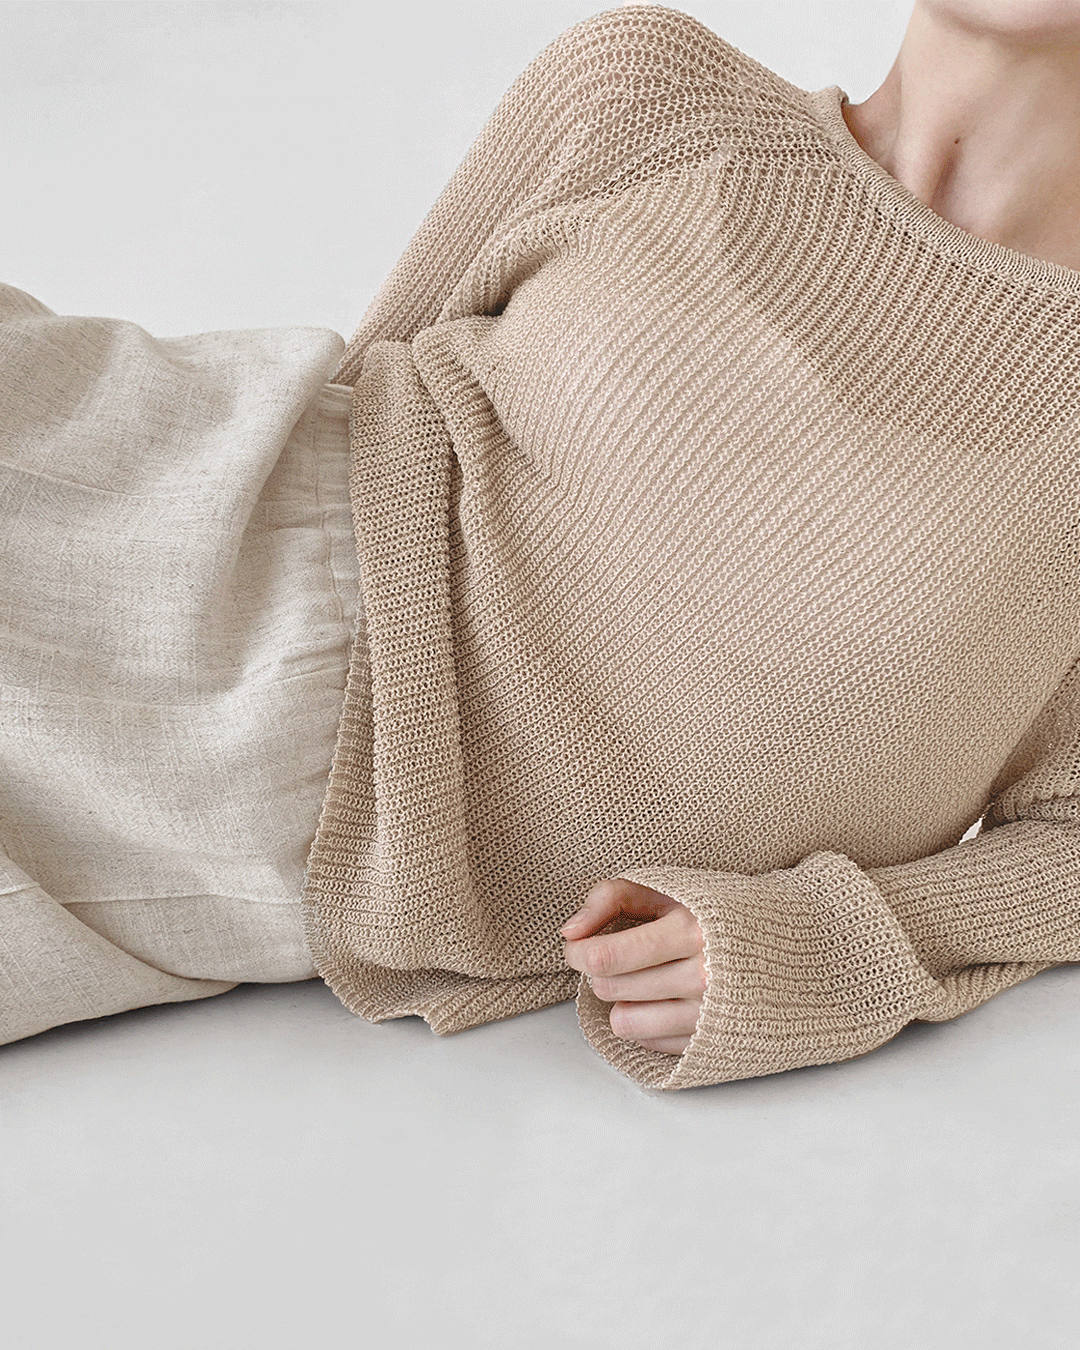 Sung knit